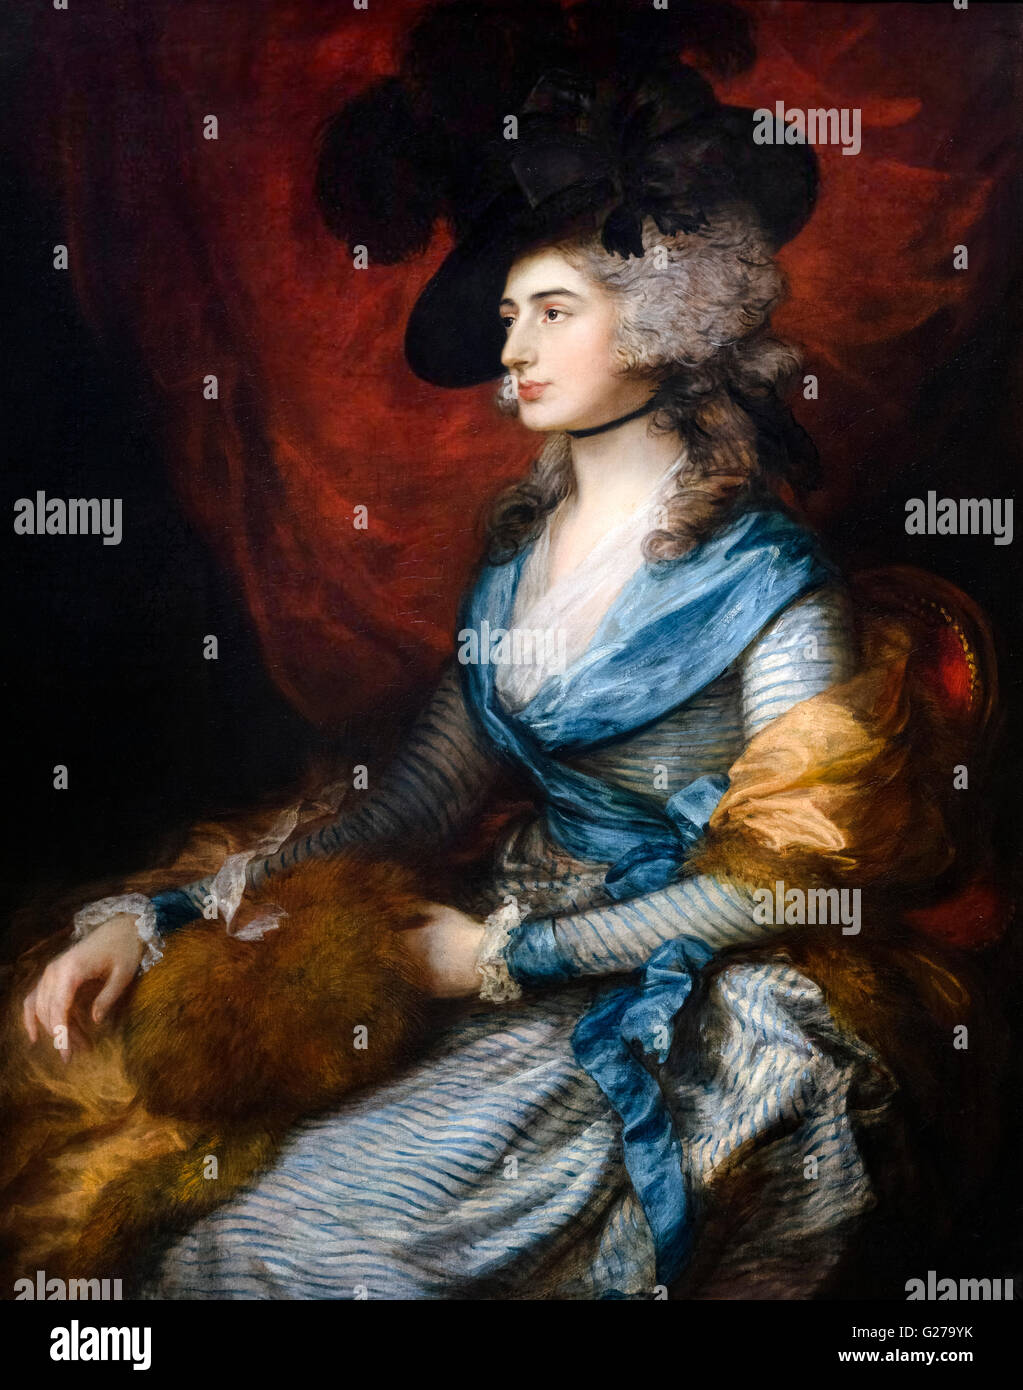 Sarah Siddons, Porträt des berühmten 18thC Shakespeare Schauspielerin von Thomas Gainsborough, Öl auf Leinwand, 1785. Stockfoto